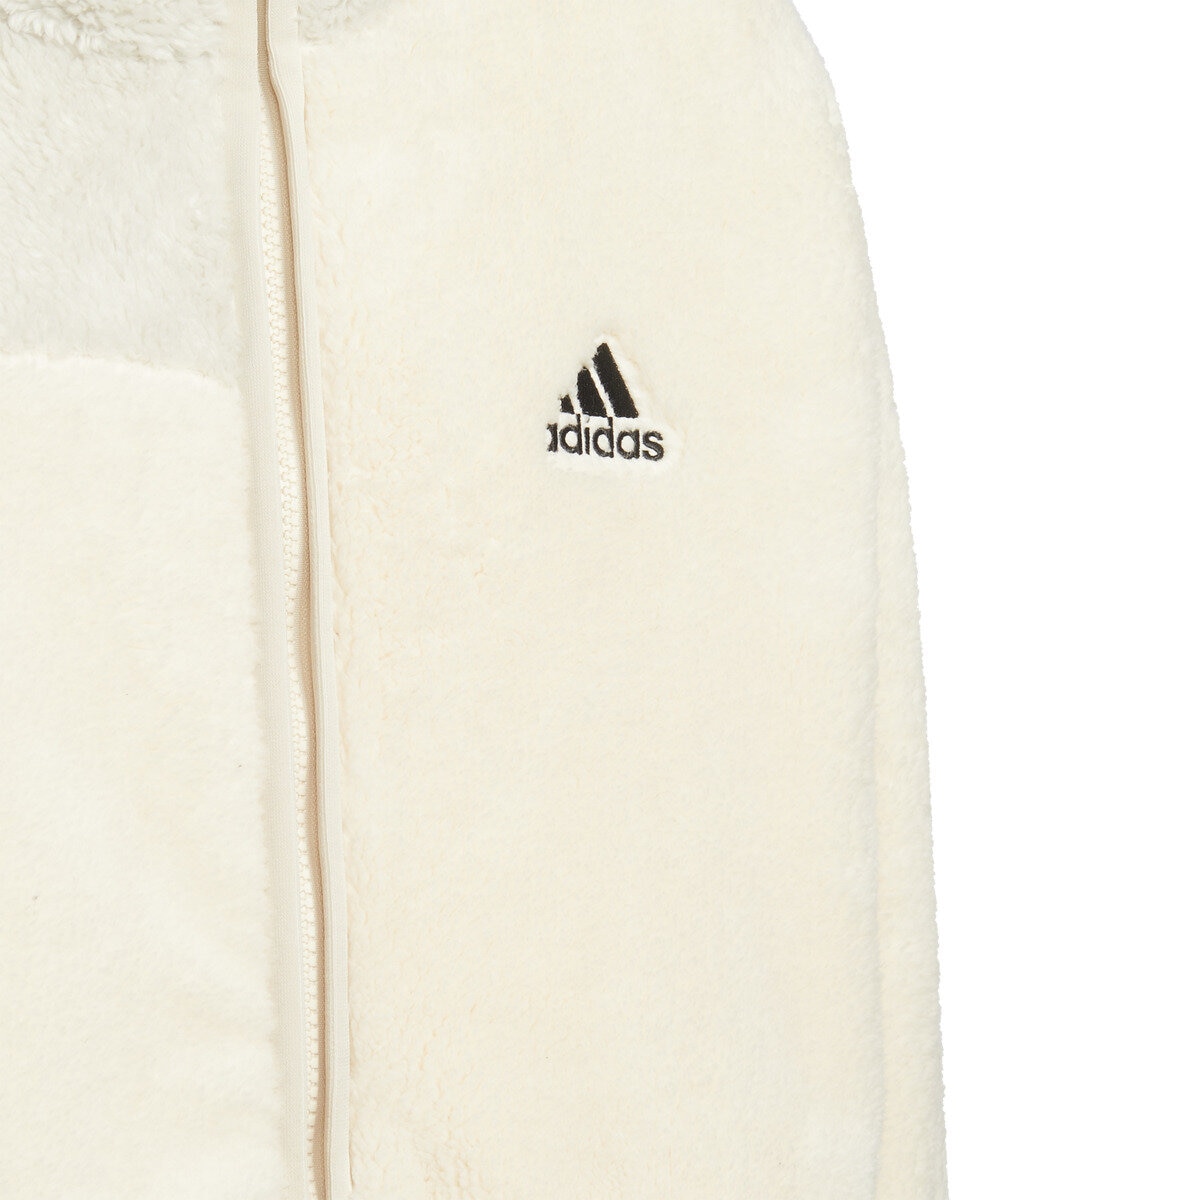 adidas 子ども用水着 150センチ 日本未発売 - 水着・水泳用品